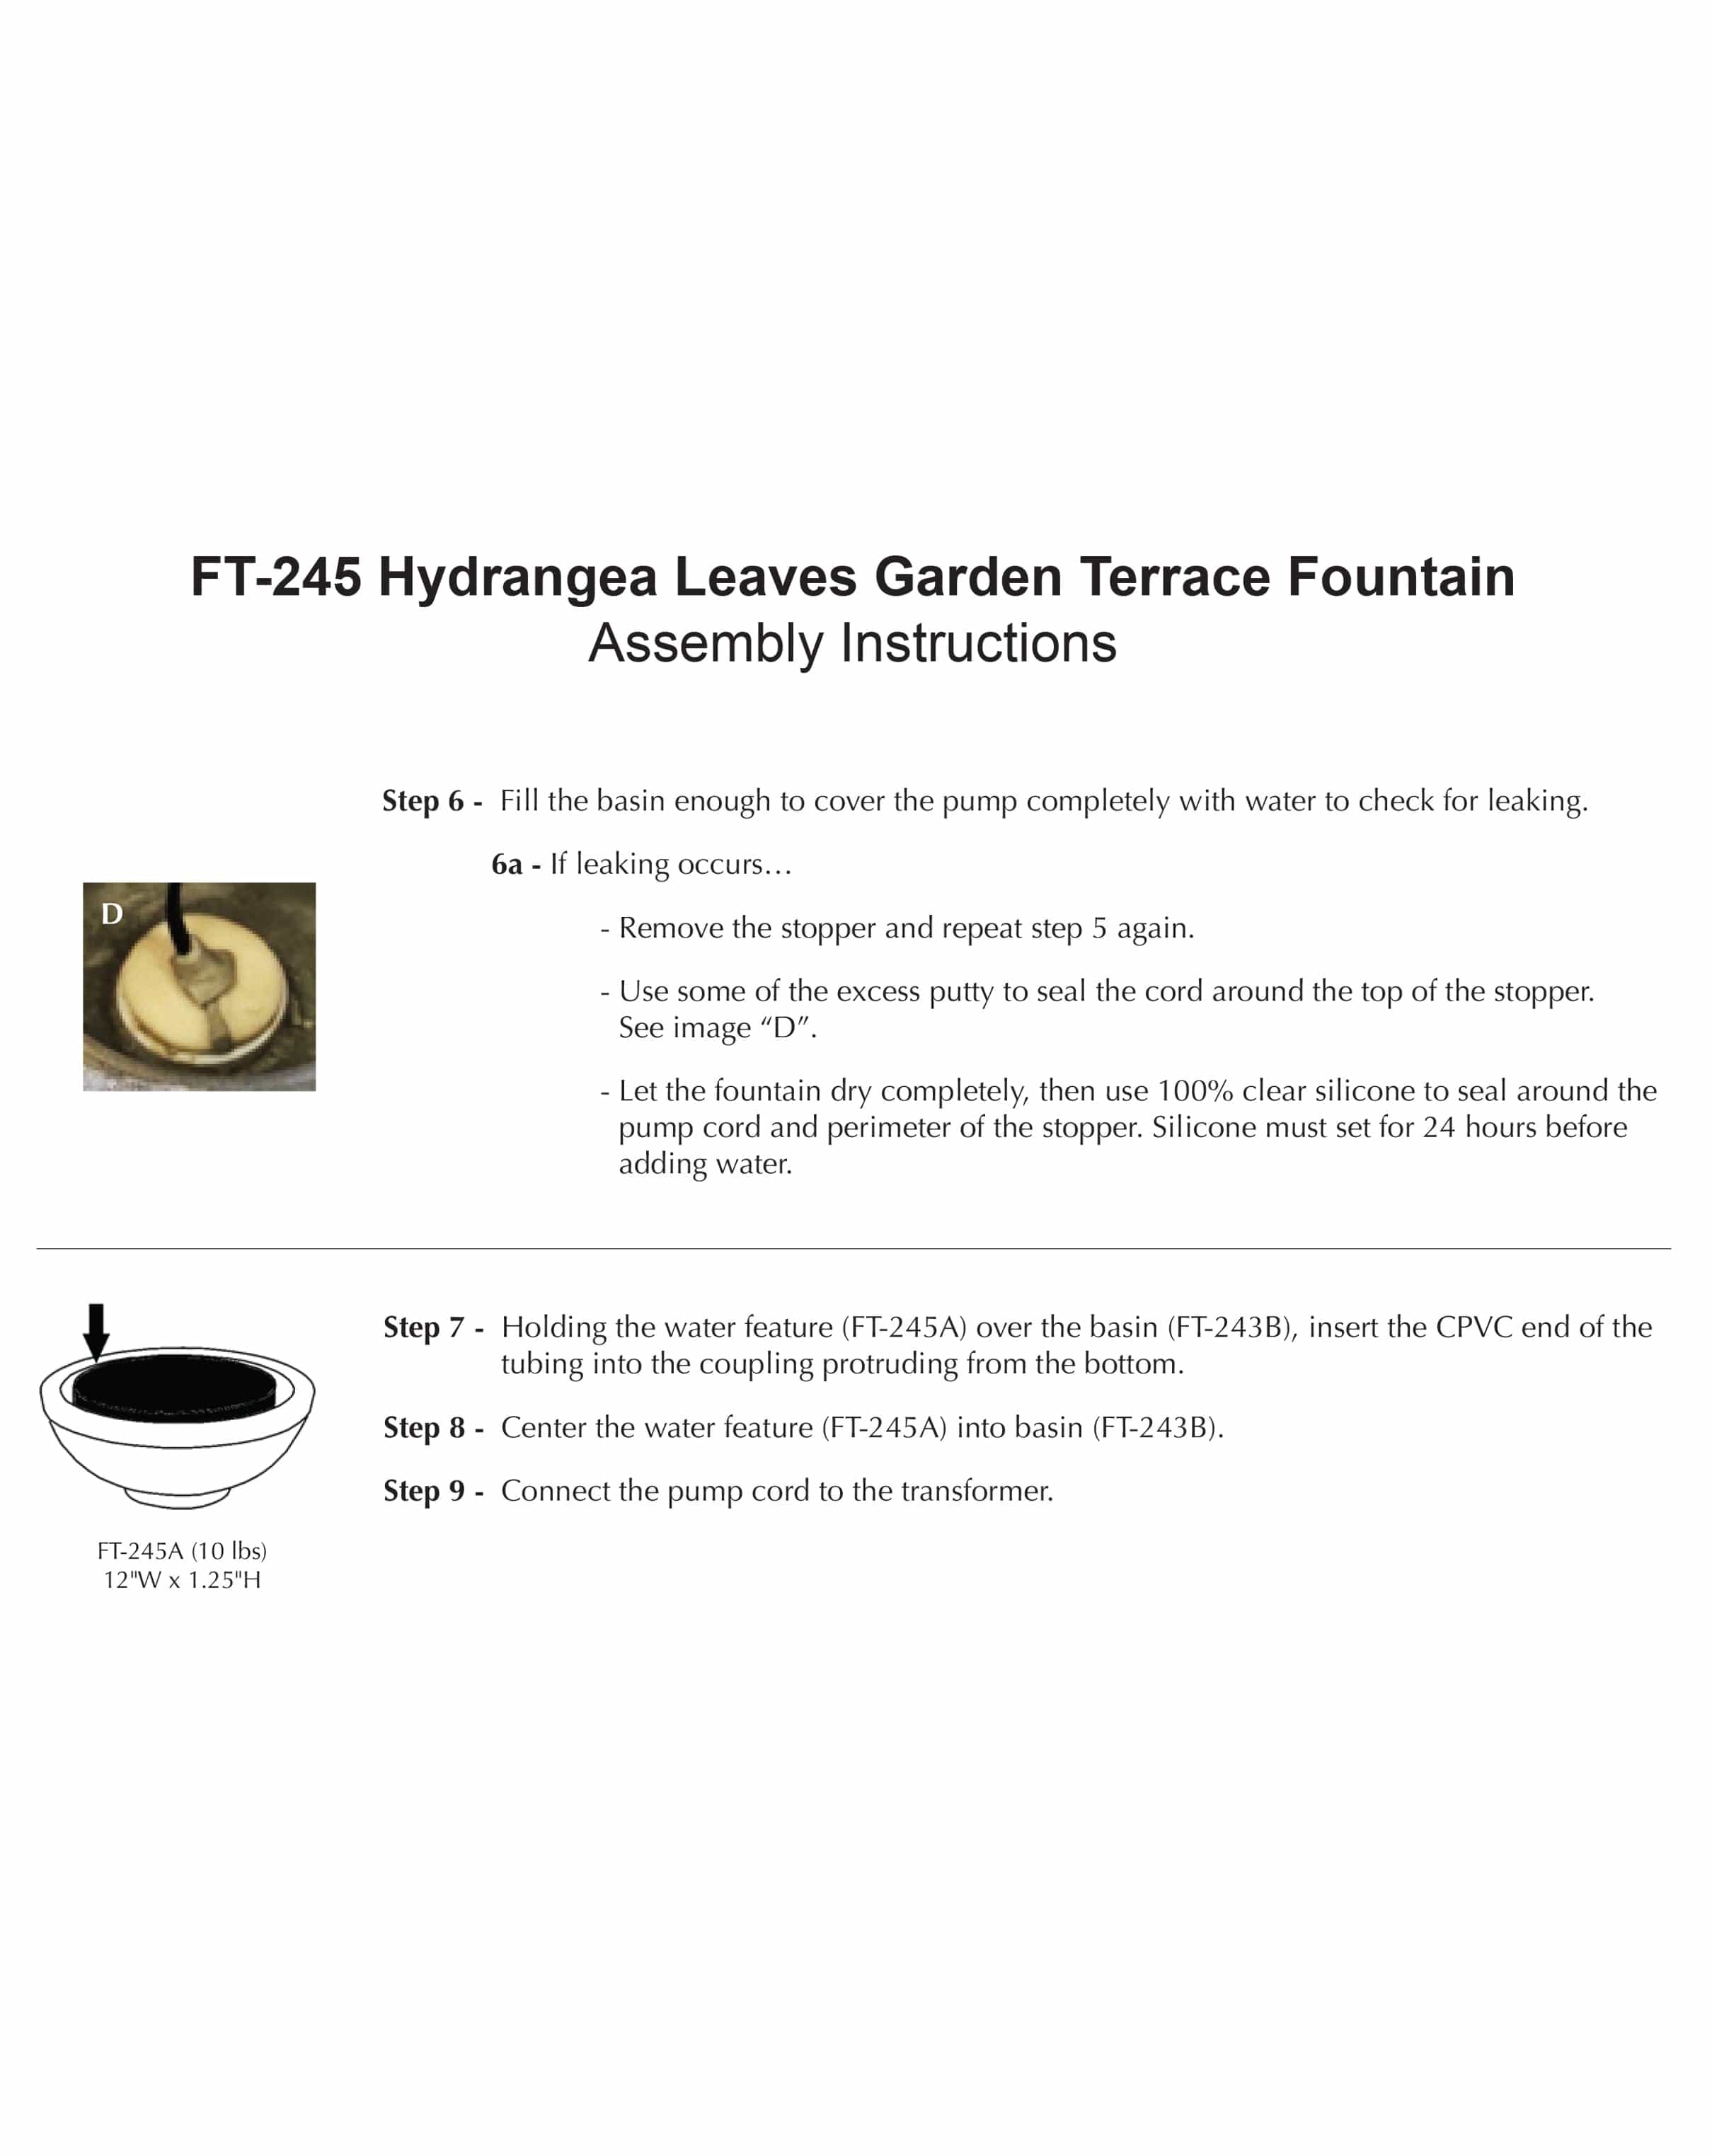 Hydrangea Leaves Garden Terrace Fountain - Outdoor Art Pros